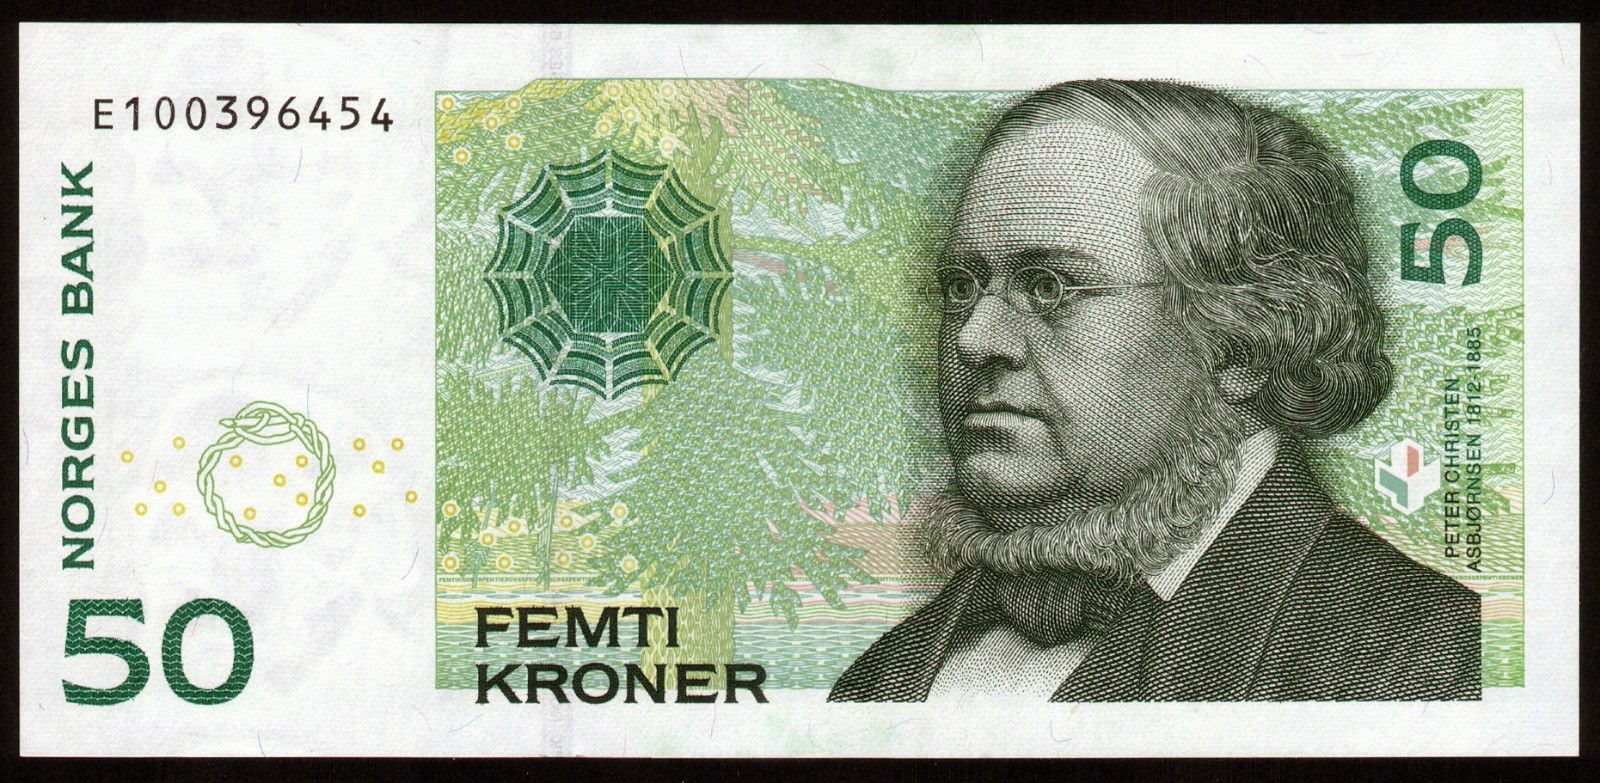 Currency of Norway 50 Norwegian Kroner note